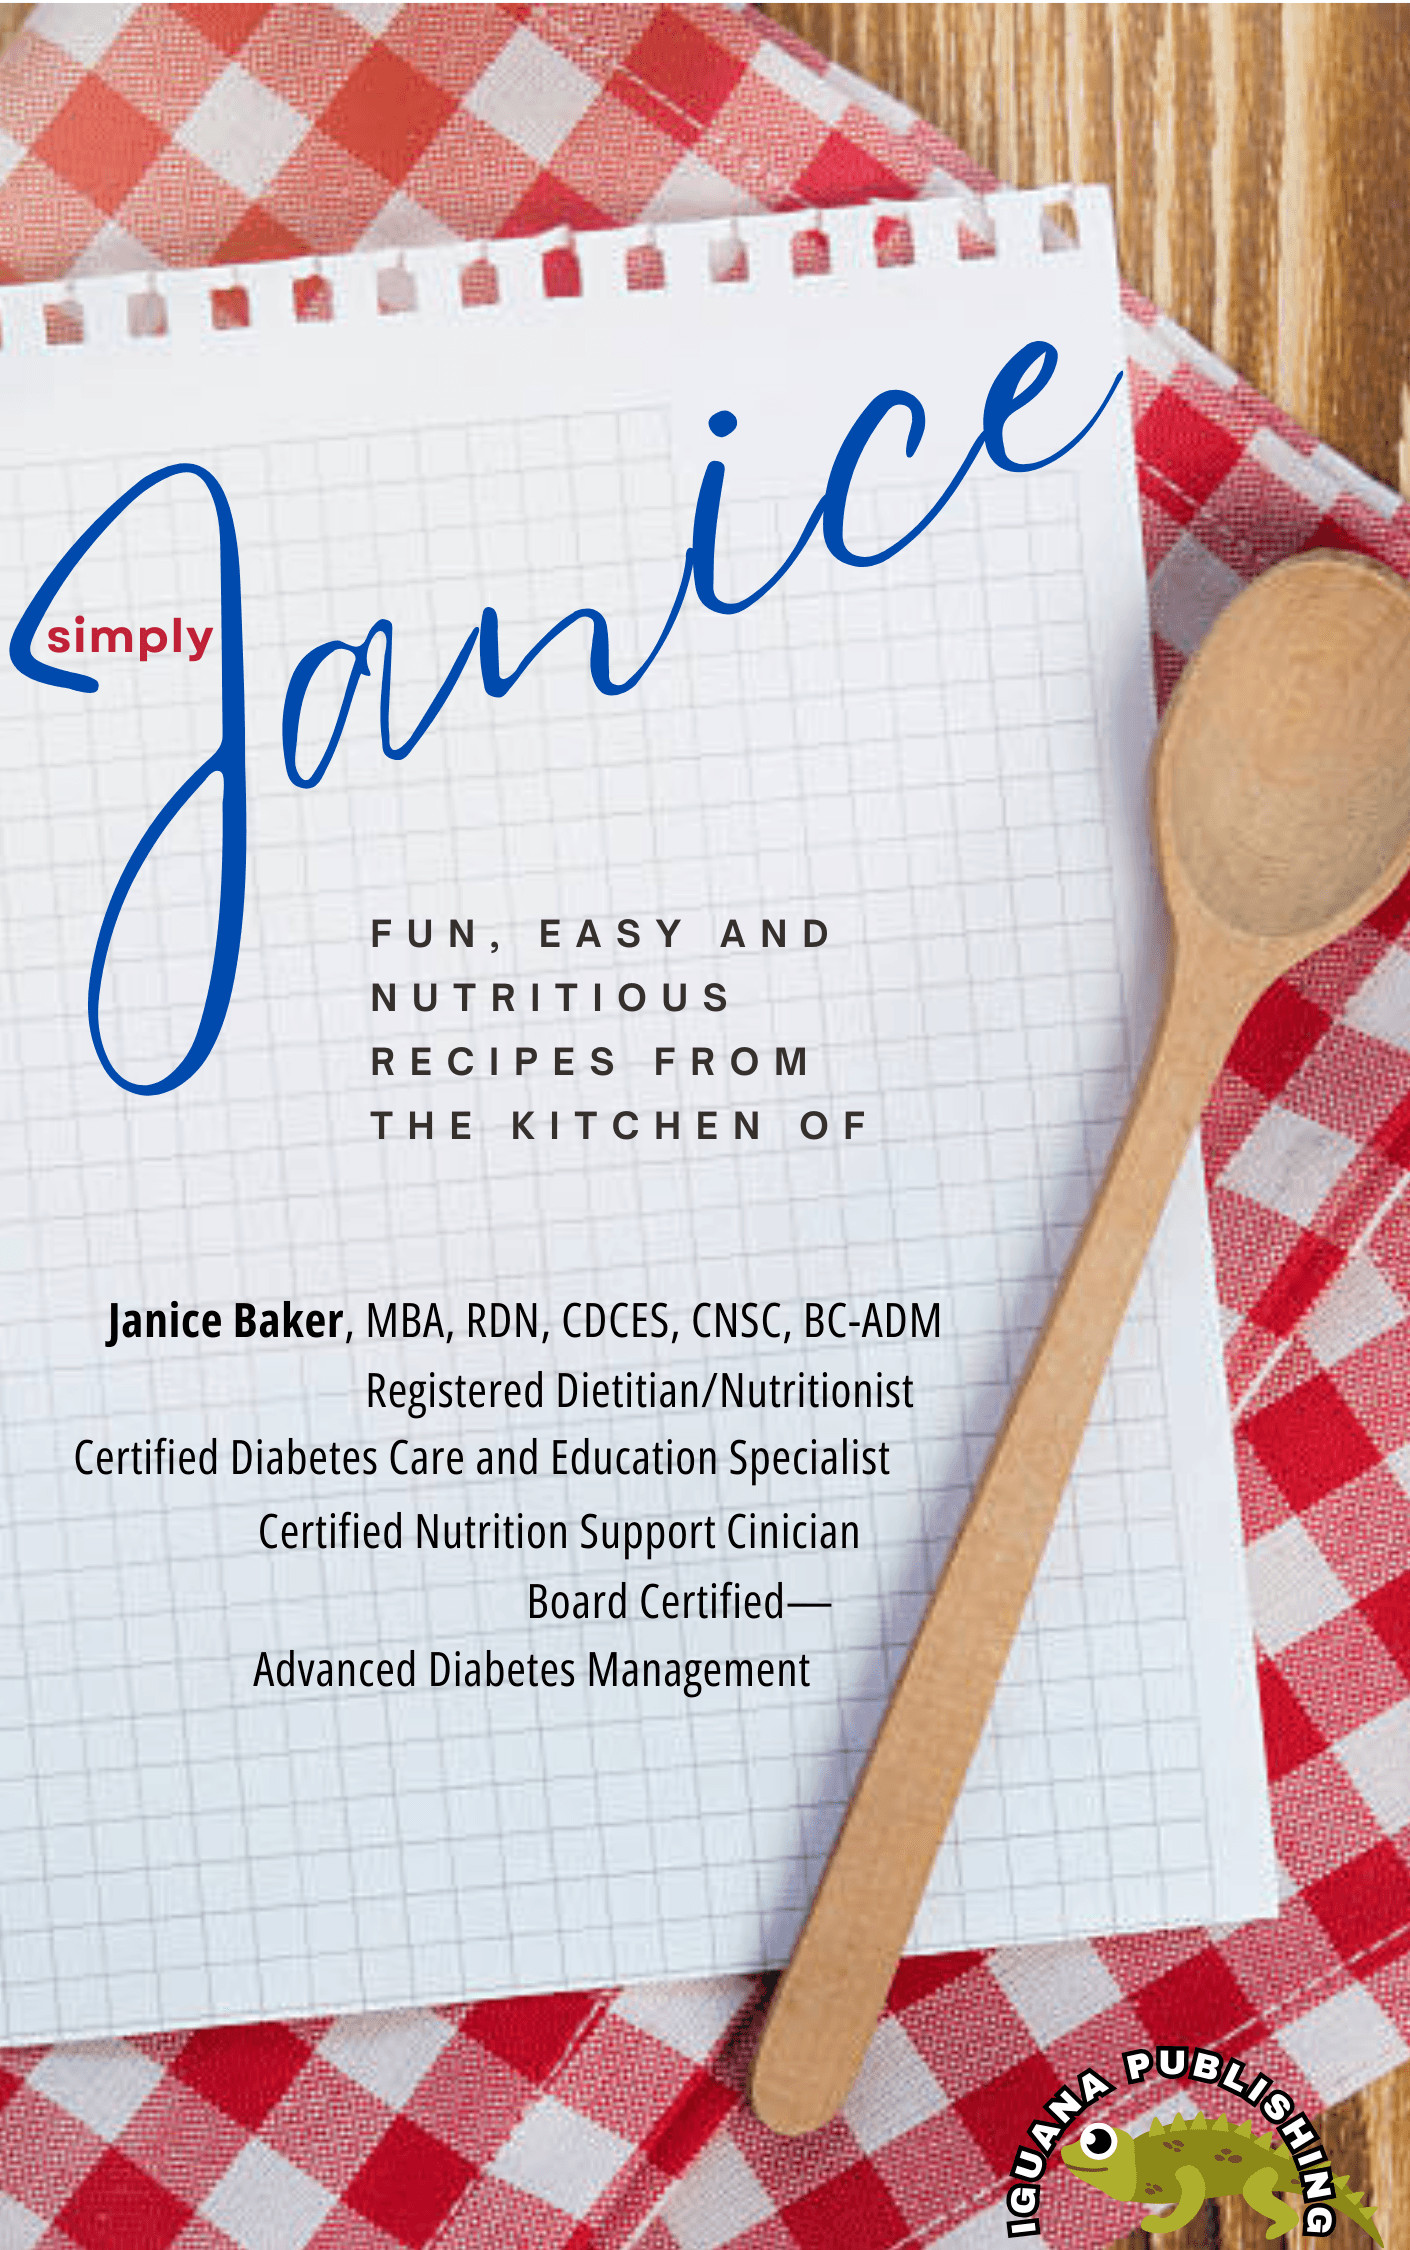 Recipes from Janice Baker